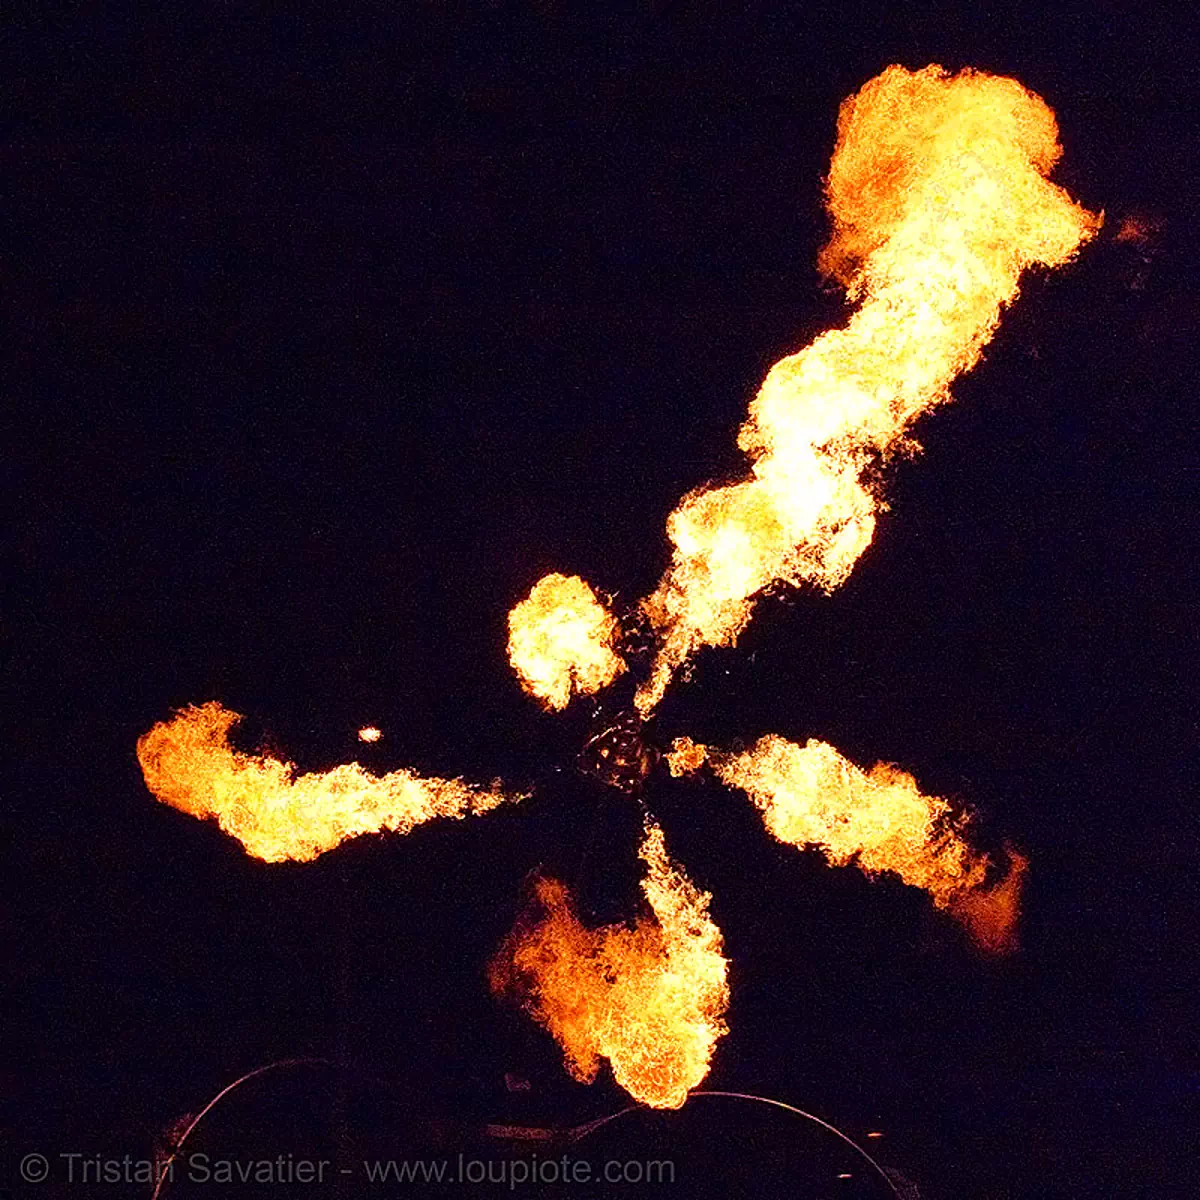 pendulum of fire - crucible fire arts festival 2007 (oakland, california), burning, fire art, pendulum of fire, pyrokinetics